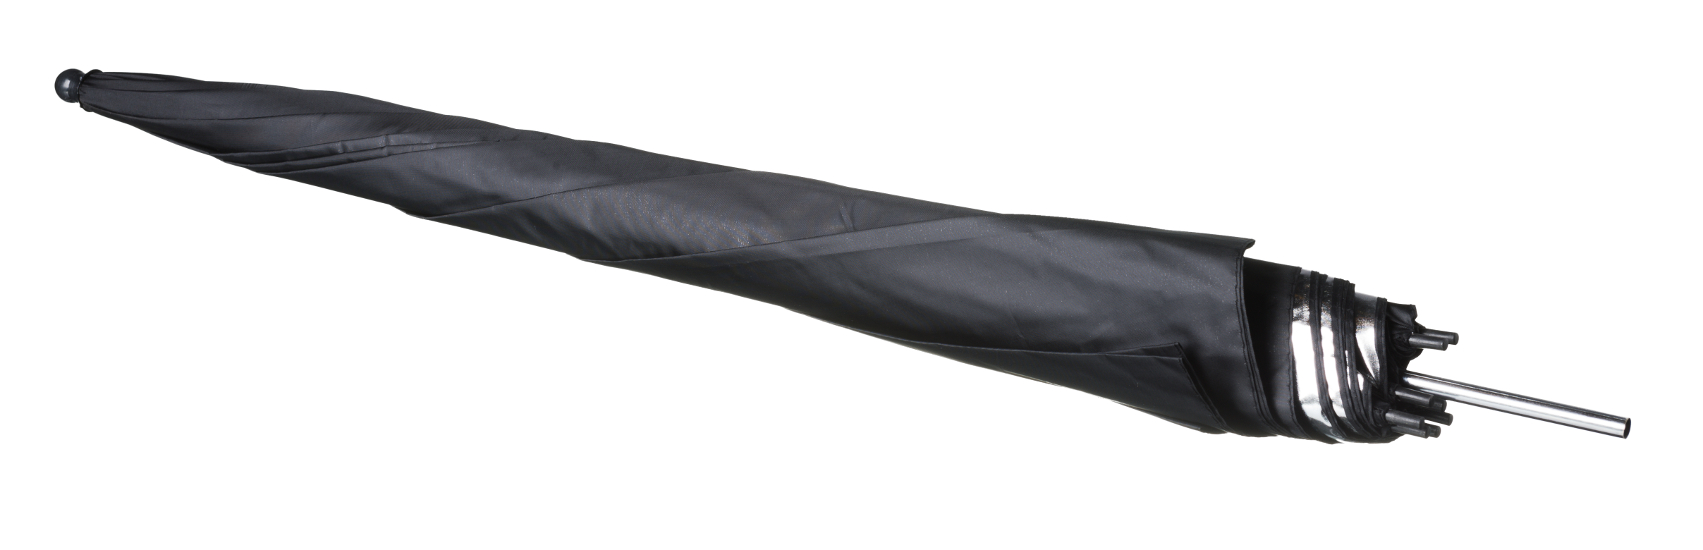 BRESSER BR-BS110 Reflective Umbrella black/silver 110cm